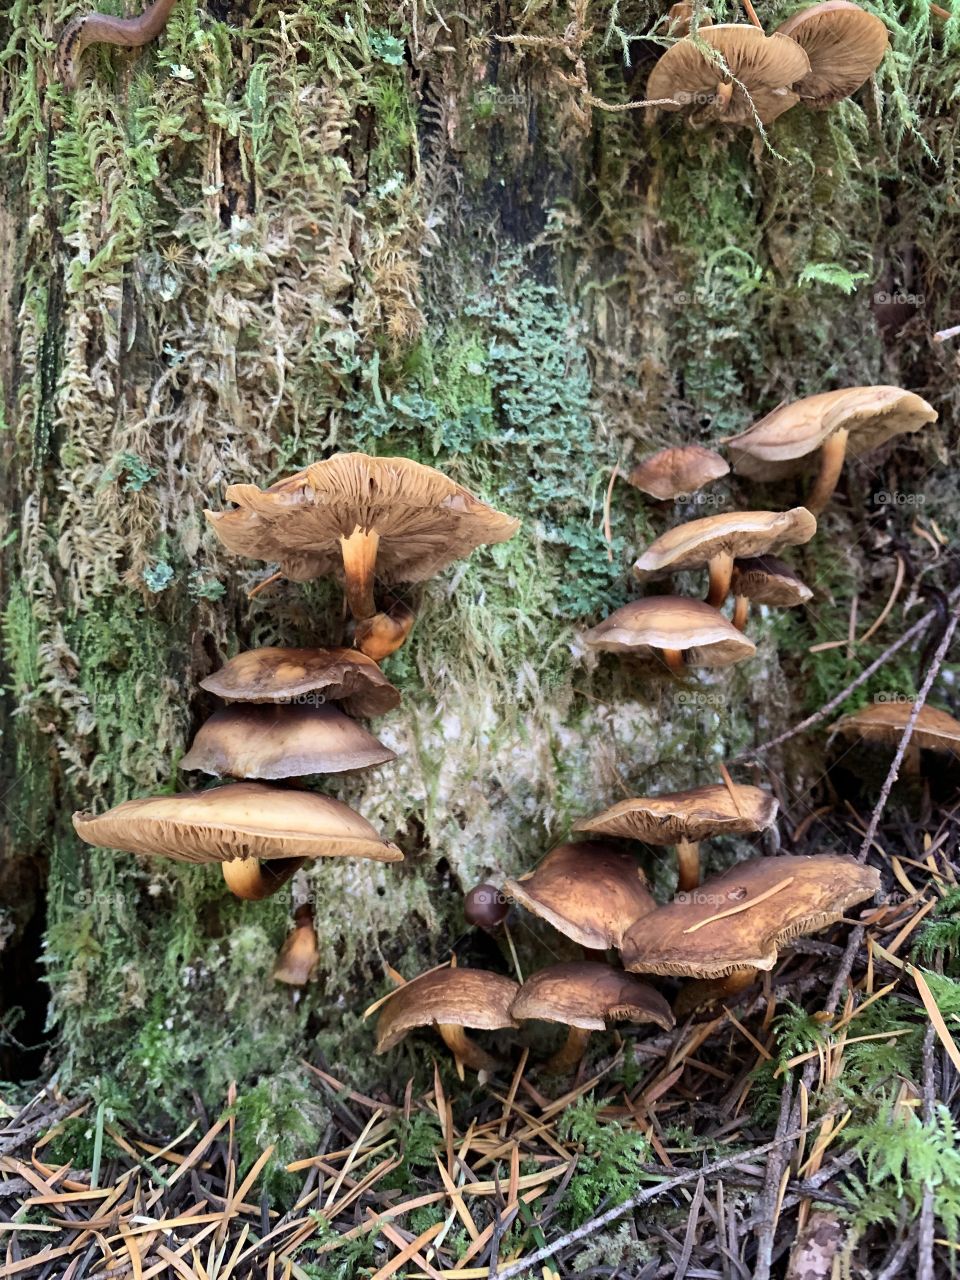  Wild Mushrooms on vertical tree